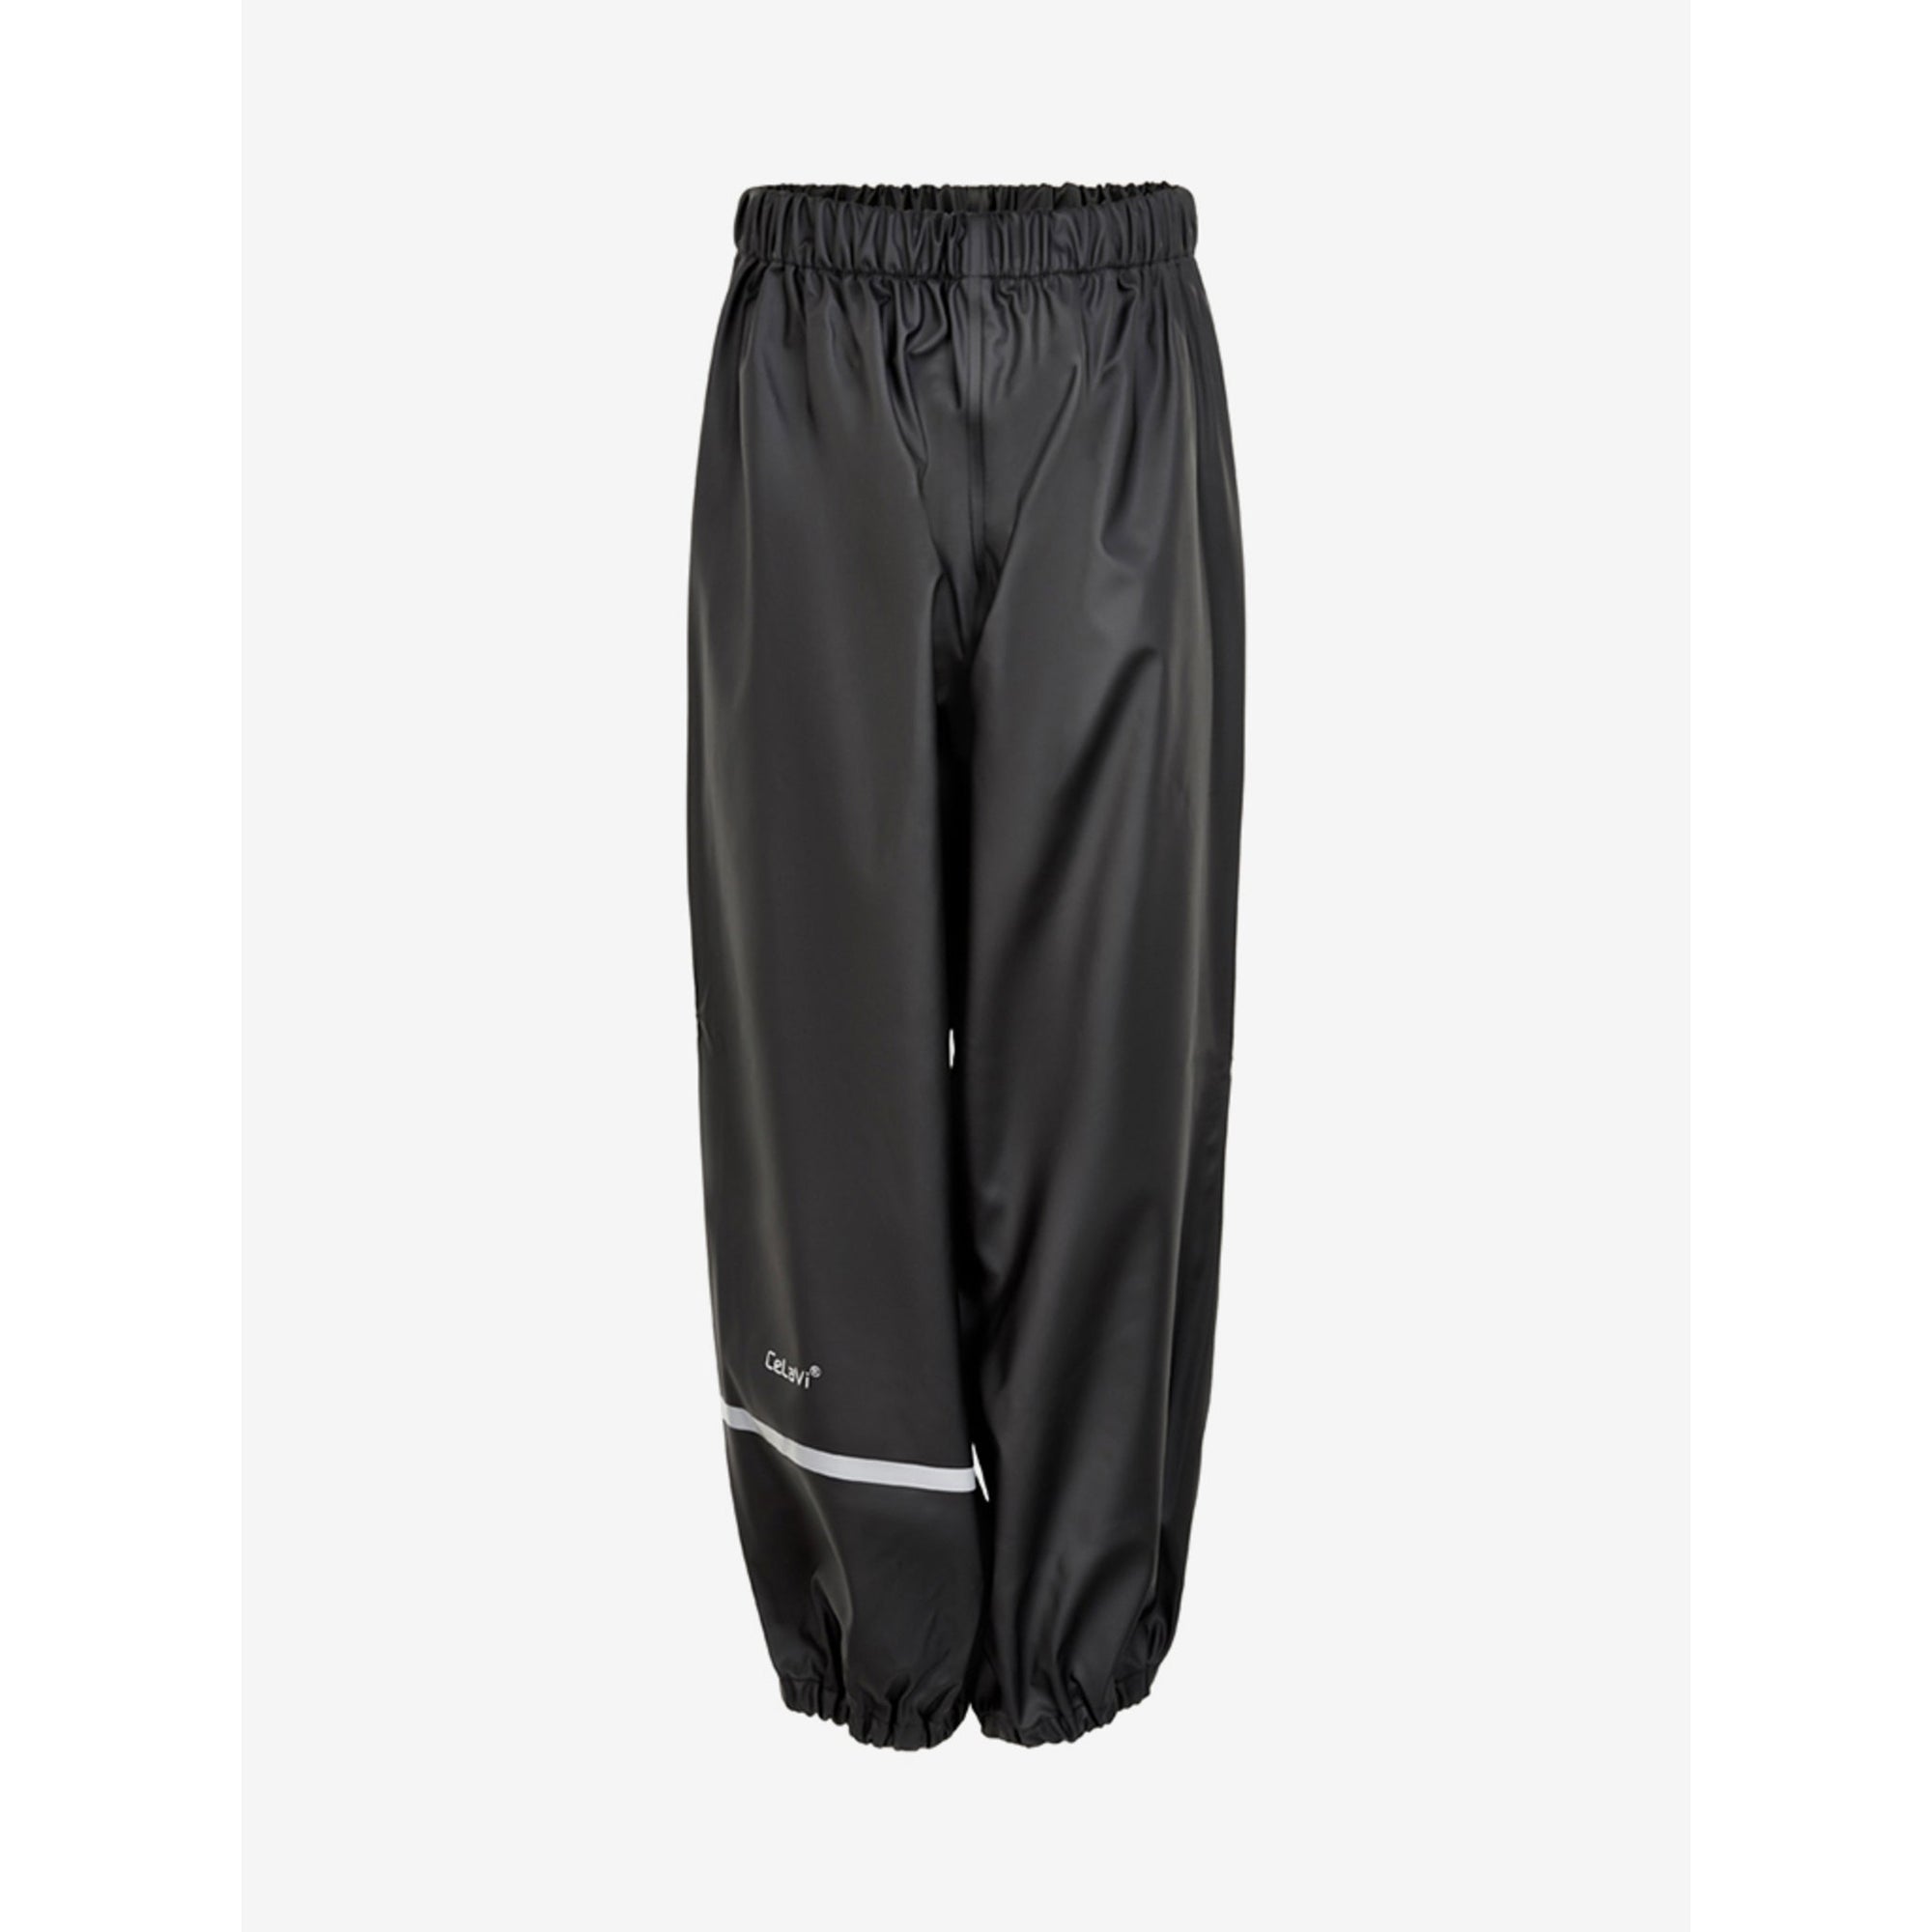 Rain Pants - Elastic Waist - Black - 2 Left Size 6-7 & 7-8 years-CeLaVi-Modern Rascals